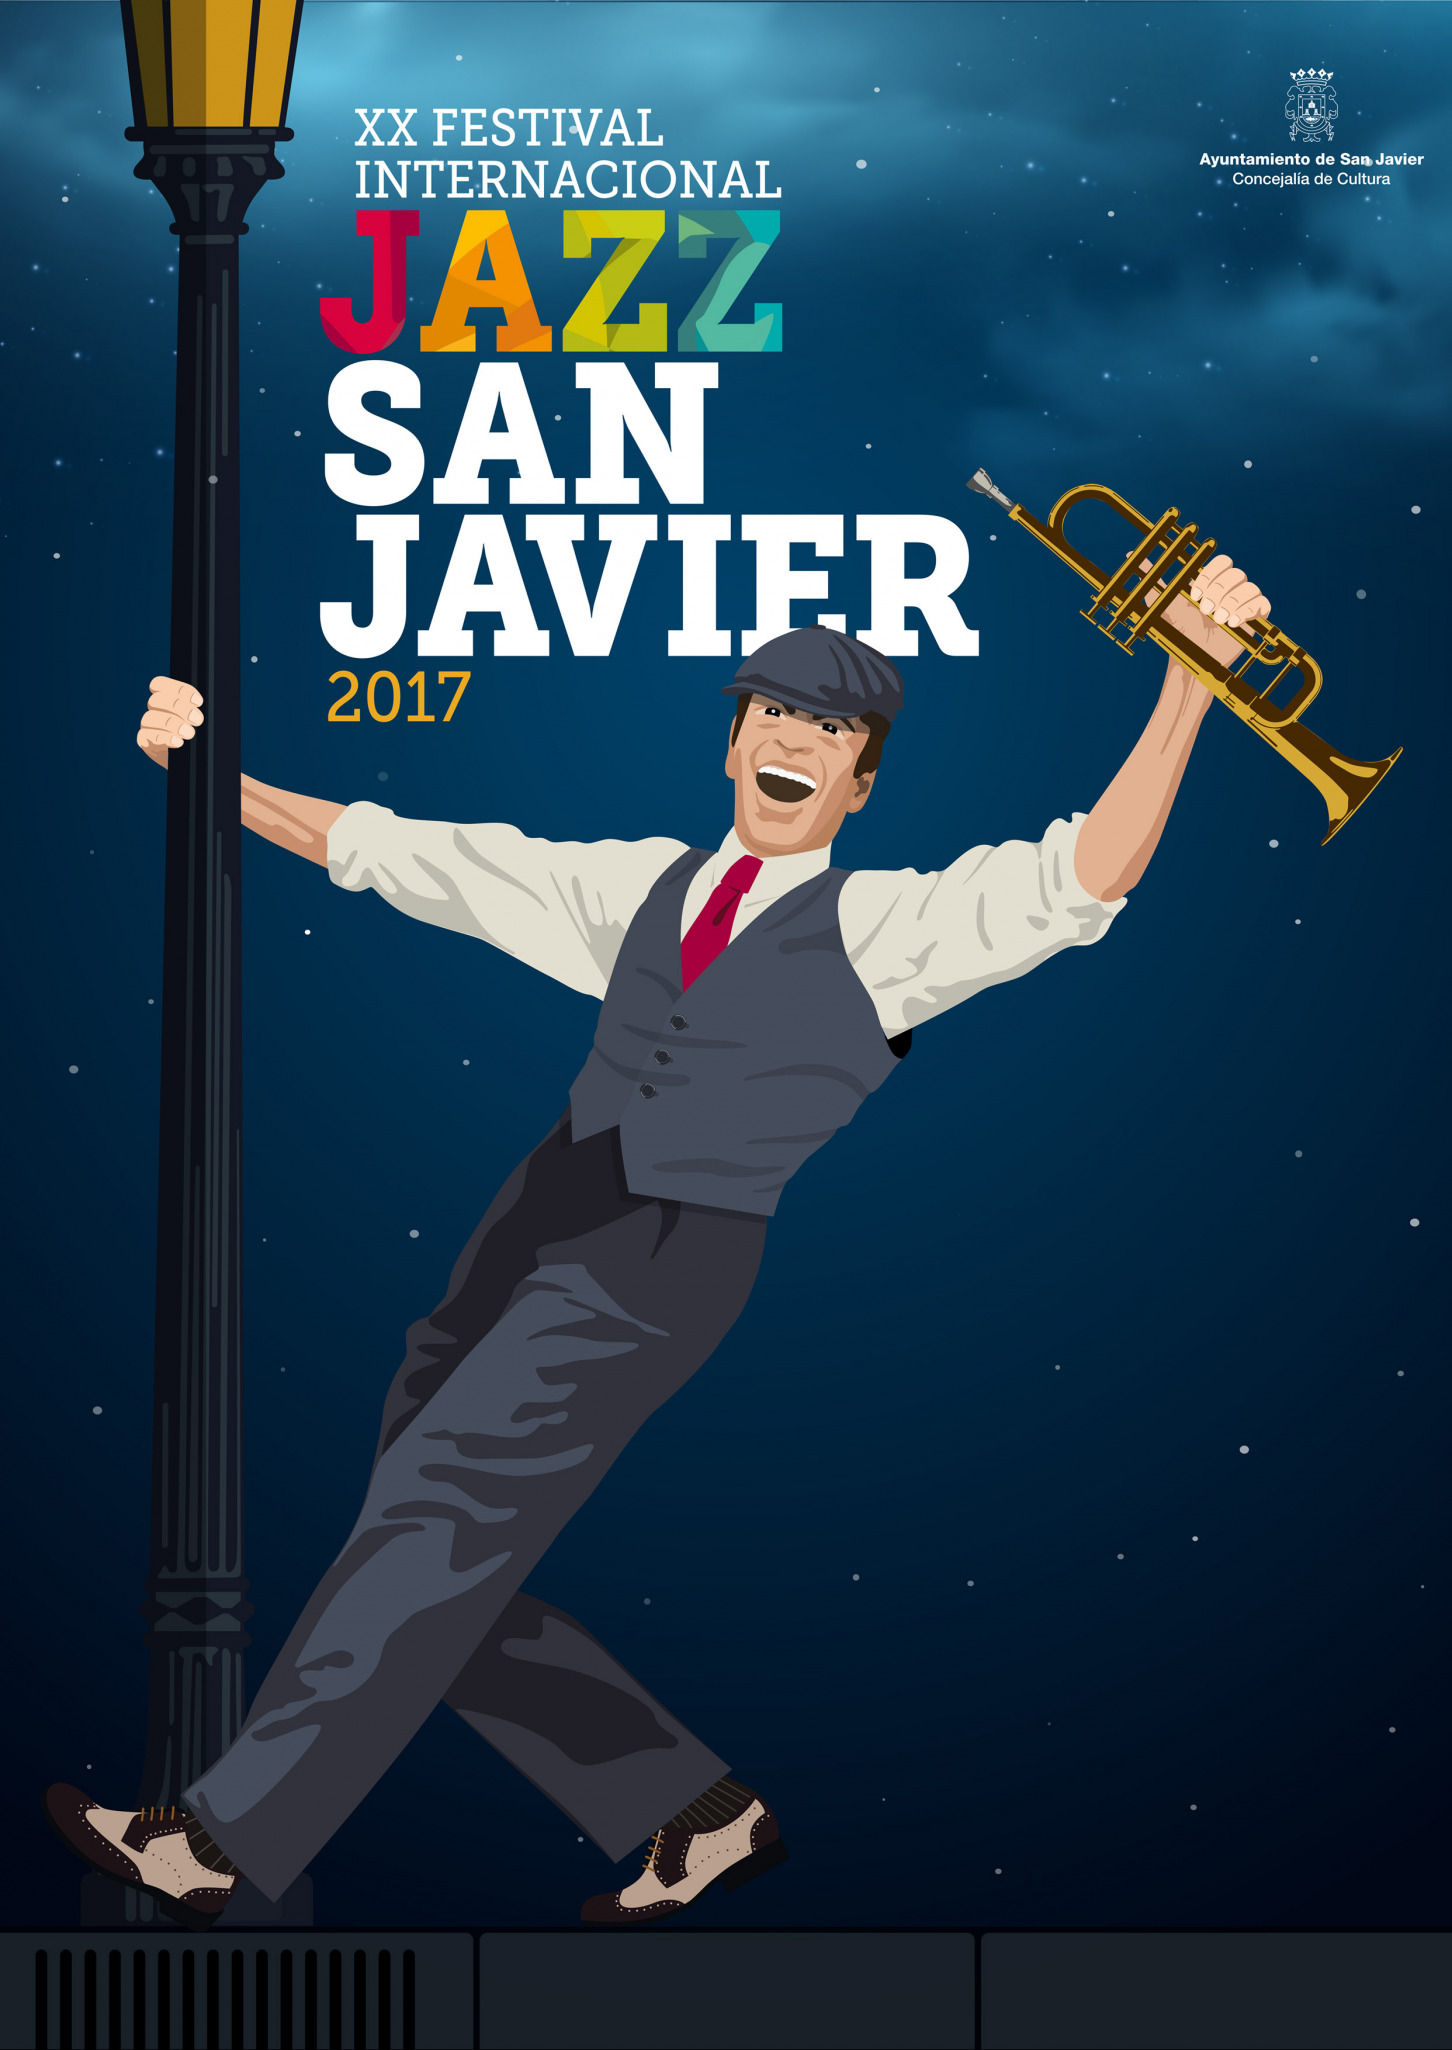 XX Festival Internacional Jazz de San Javier